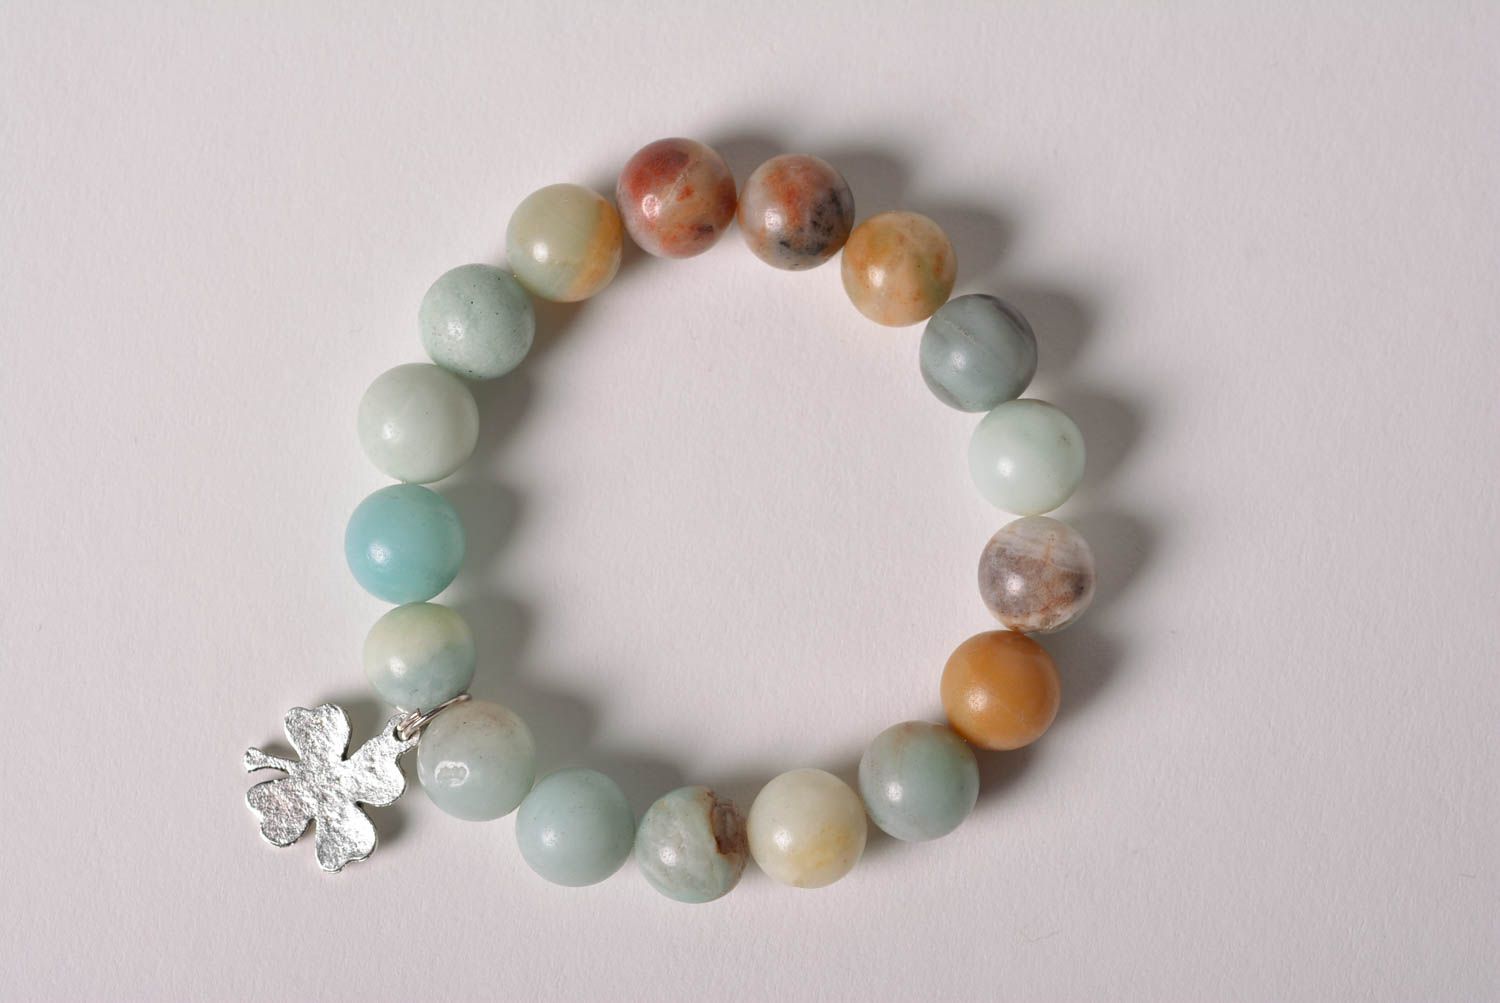 Handmade tender wrist bracelet with natural amazonite stone beads for women photo 2